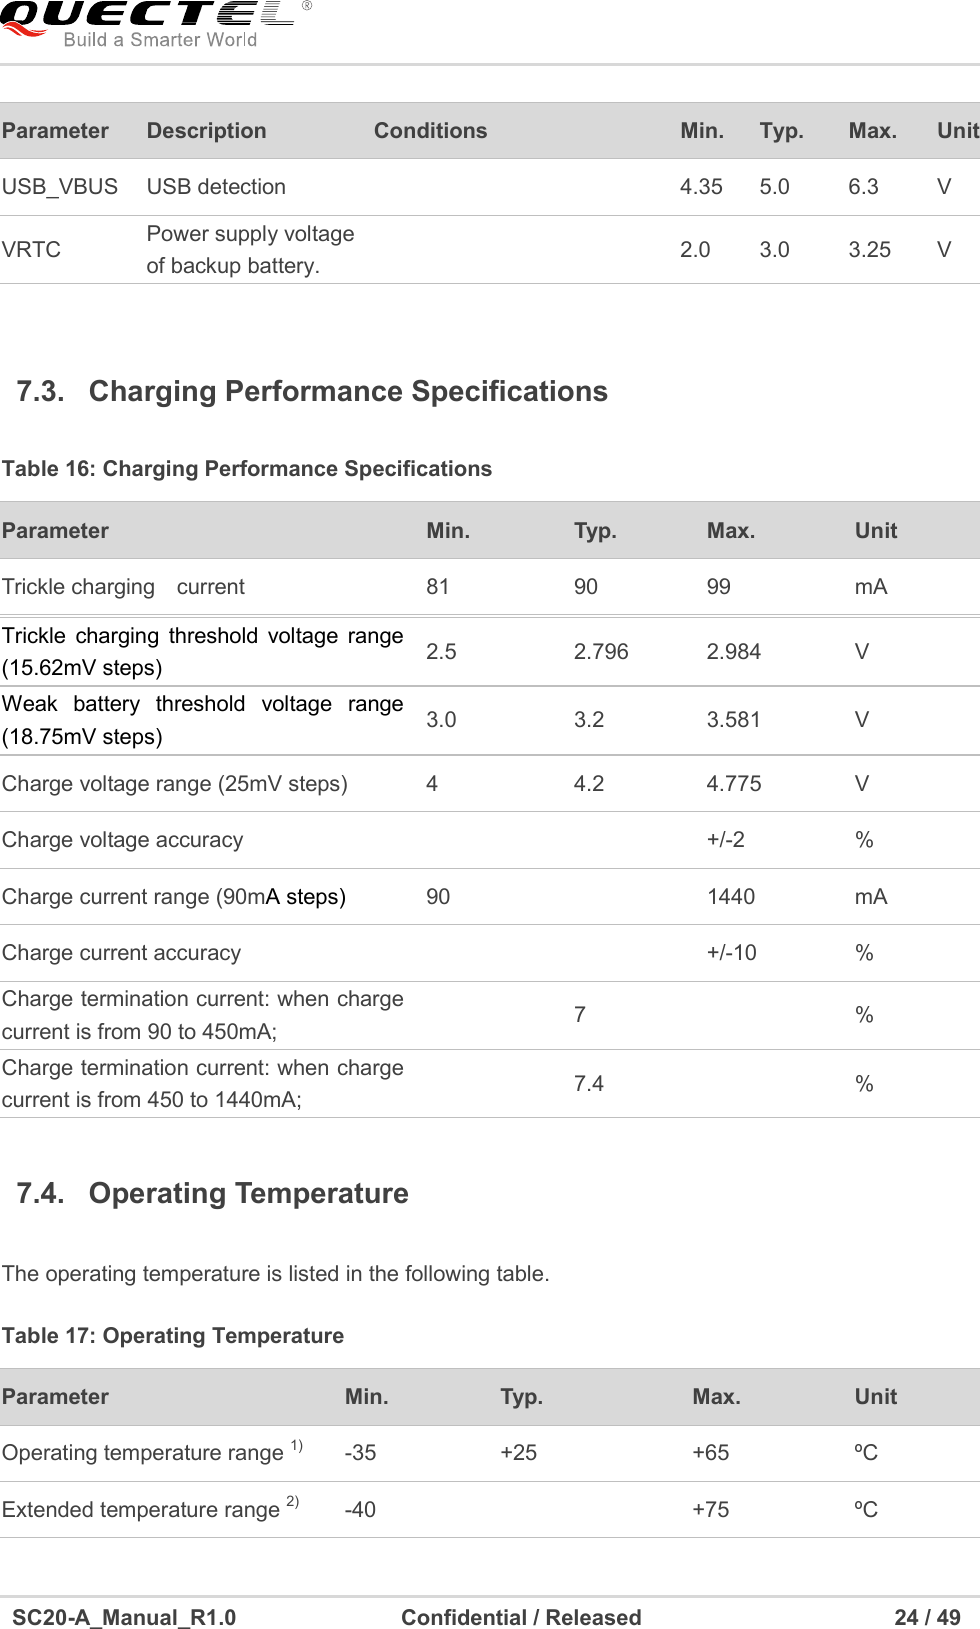     SC20-A_Manual_R1.0                              Confidential / Released                                              24 / 49    Parameter  Description  Conditions  Min.  Typ.  Max.  Unit USB_VBUS USB detection    4.35  5.0  6.3  V VRTC  Power supply voltage of backup battery.    2.0  3.0  3.25  V  7.3.  Charging Performance Specifications Table 16: Charging Performance Specifications Parameter  Min.  Typ.  Max.  Unit Trickle charging    current  81  90  99  mA Charge voltage range (25mV steps)  4  4.2  4.775  V Charge voltage accuracy      +/-2  % Charge current range (90mA steps)    90    1440  mA Charge current accuracy      +/-10  % Charge termination current: when charge current is from 90 to 450mA;    7    % Charge termination current: when charge current is from 450 to 1440mA;    7.4    %     7.4.  Operating Temperature  The operating temperature is listed in the following table. Table 17: Operating Temperature Parameter  Min.  Typ.  Max.  Unit Operating temperature range 1) -35  +25  +65  ºC Extended temperature range 2) -40    +75  ºC Trickle  charging  threshold  voltage  range (15.62mV steps)    2.5  2.796  2.984  V Weak  battery  threshold  voltage  range (18.75mV steps)  3.0  3.2  3.581  V 